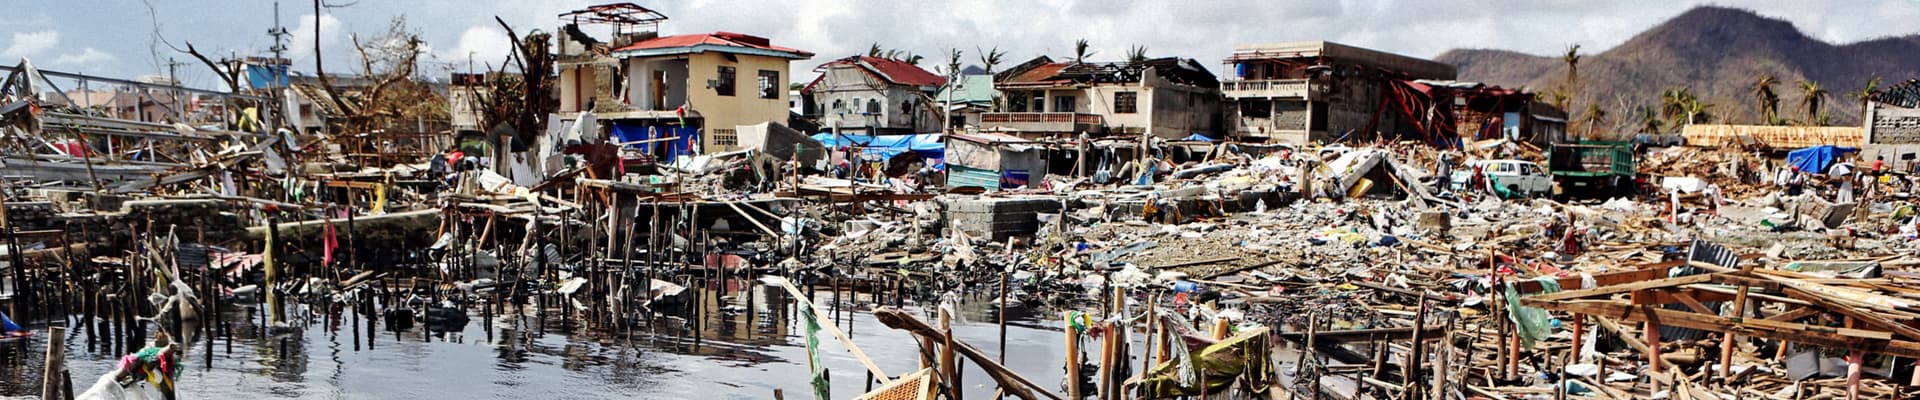 2103, il devastante tifone Haiyan si abbate su Tacloban, nelle Filippine